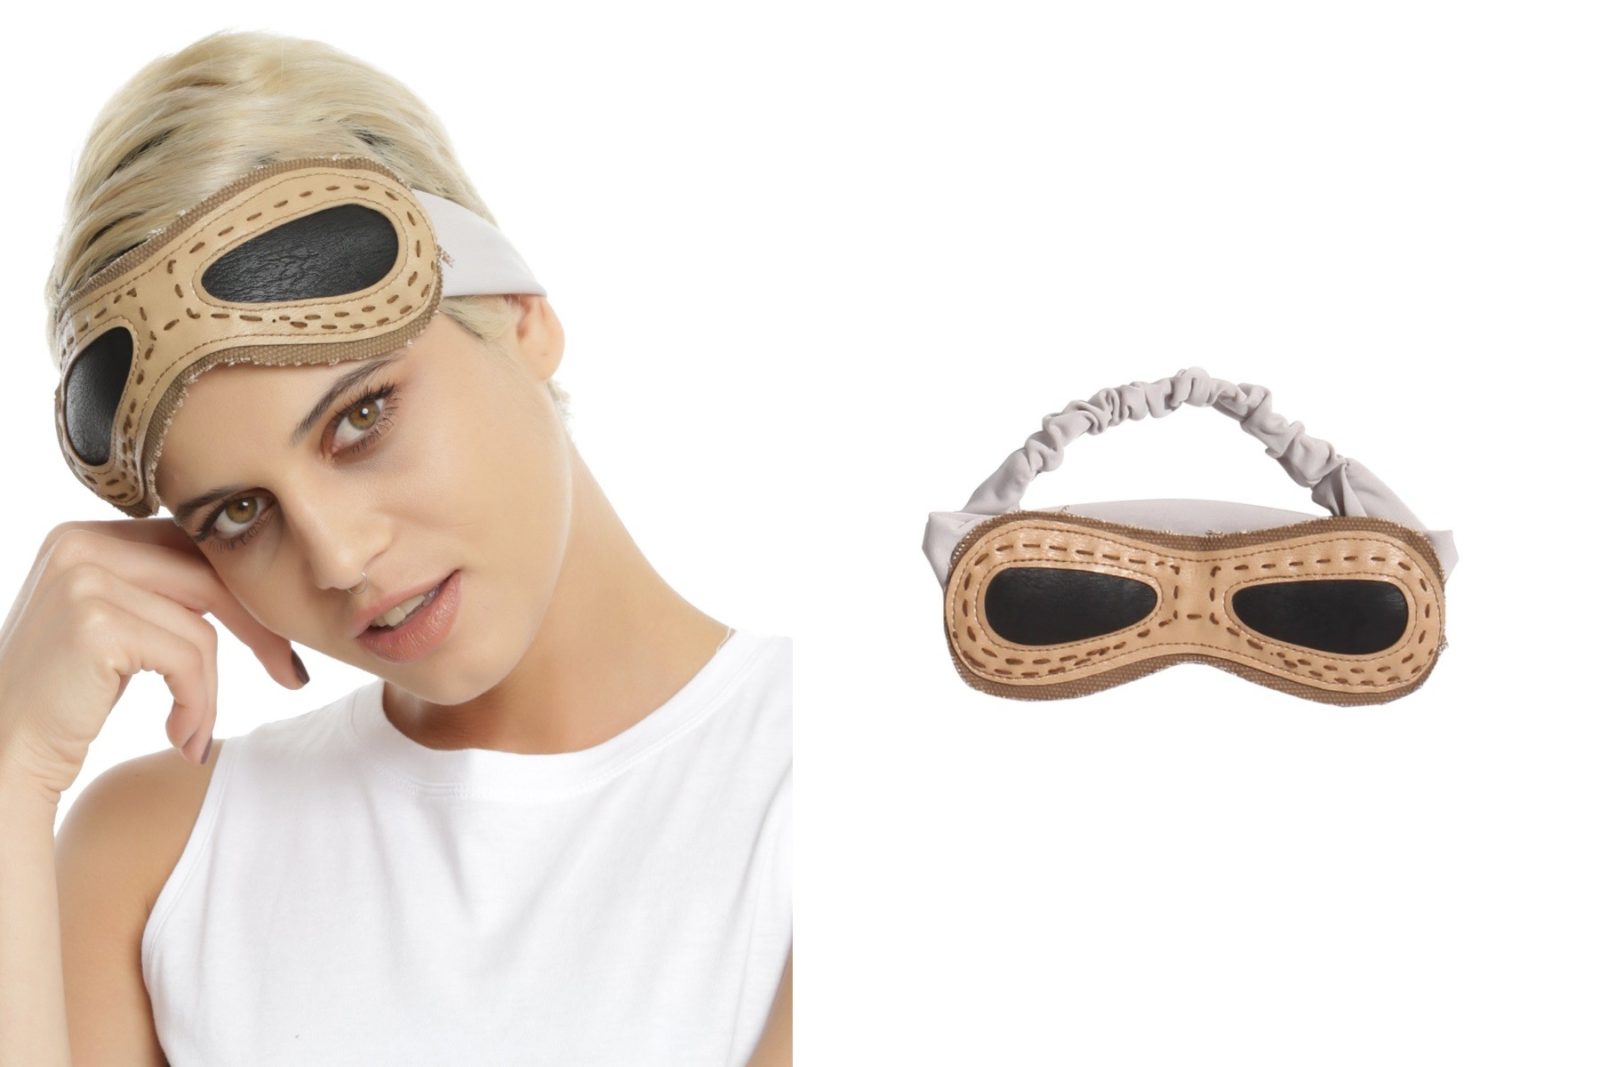 Rey goggles headband at Hot Topic